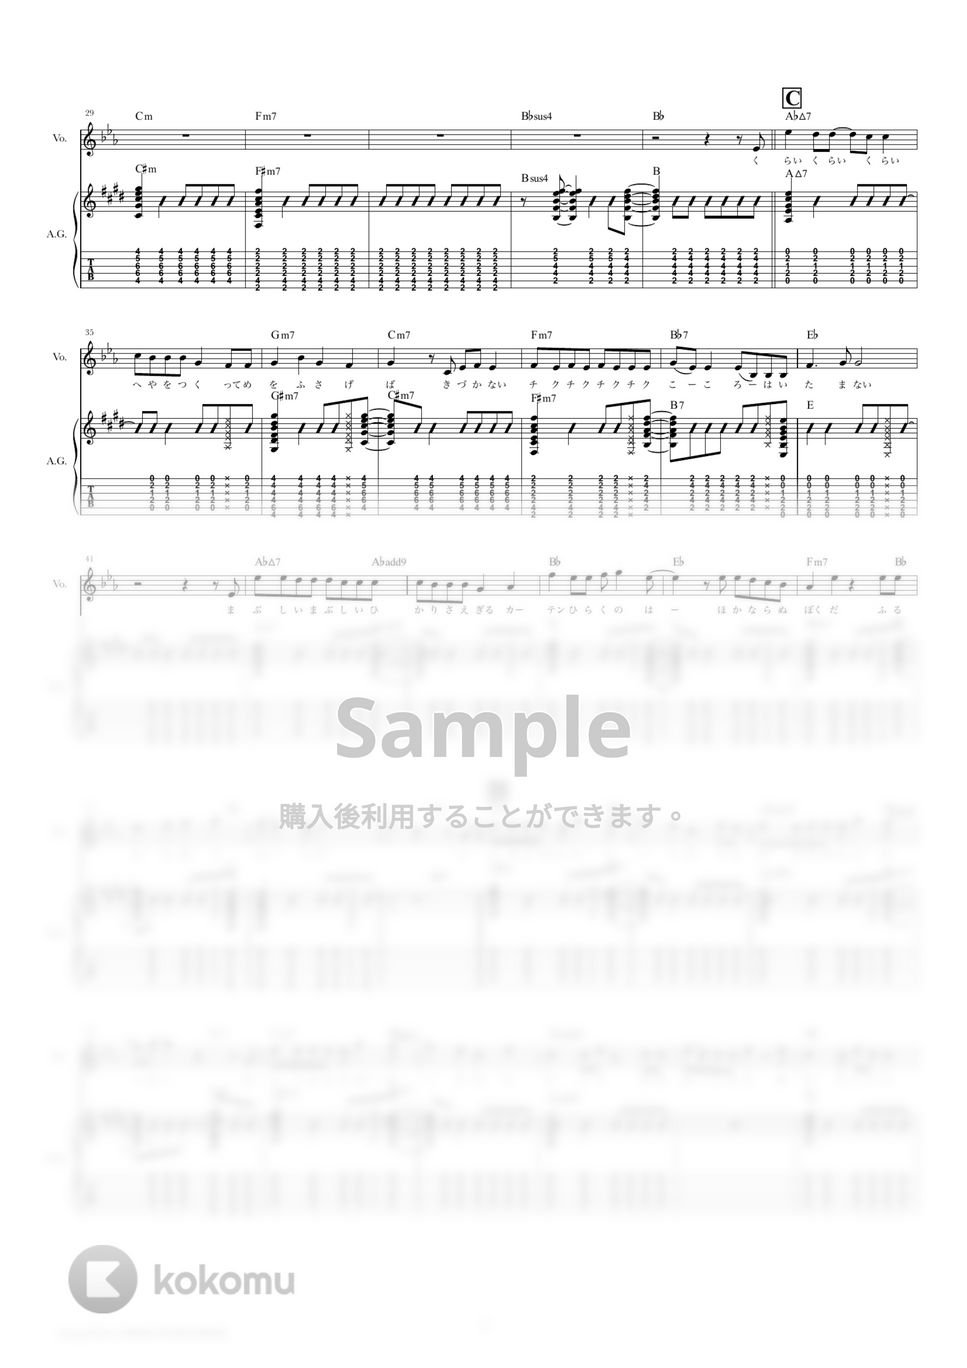 sumika - ファンファーレ (弾き語り・歌詞・コード付き) by TRIAD GUITAR SCHOOL